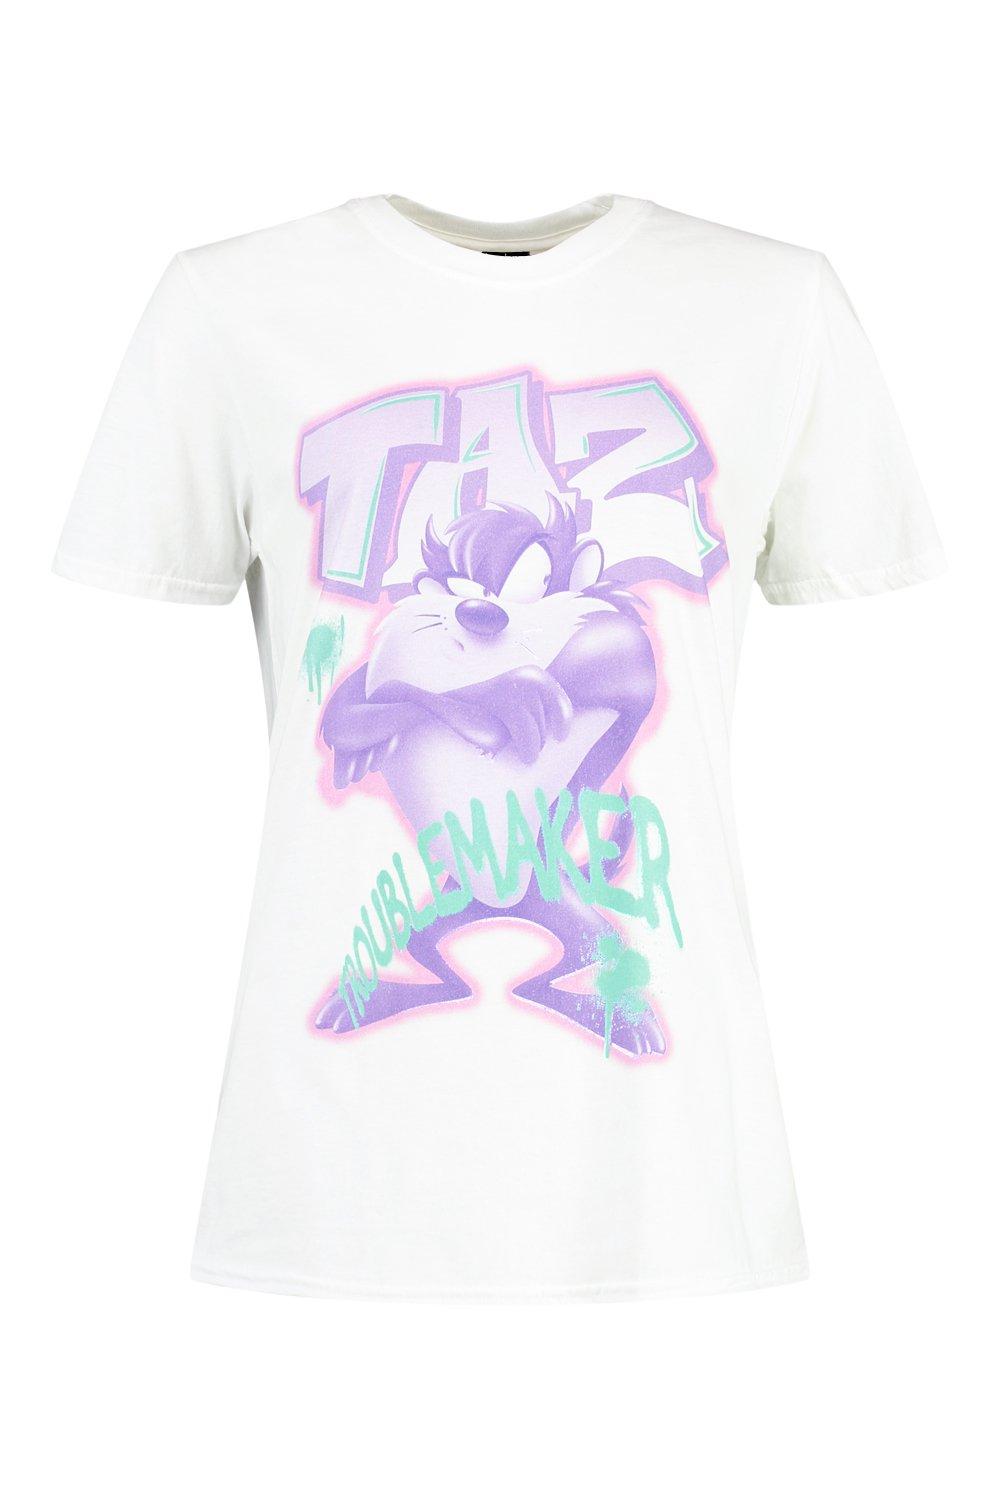 Tunes Grafitti boohoo | Looney Licensed T-Shirt Taz